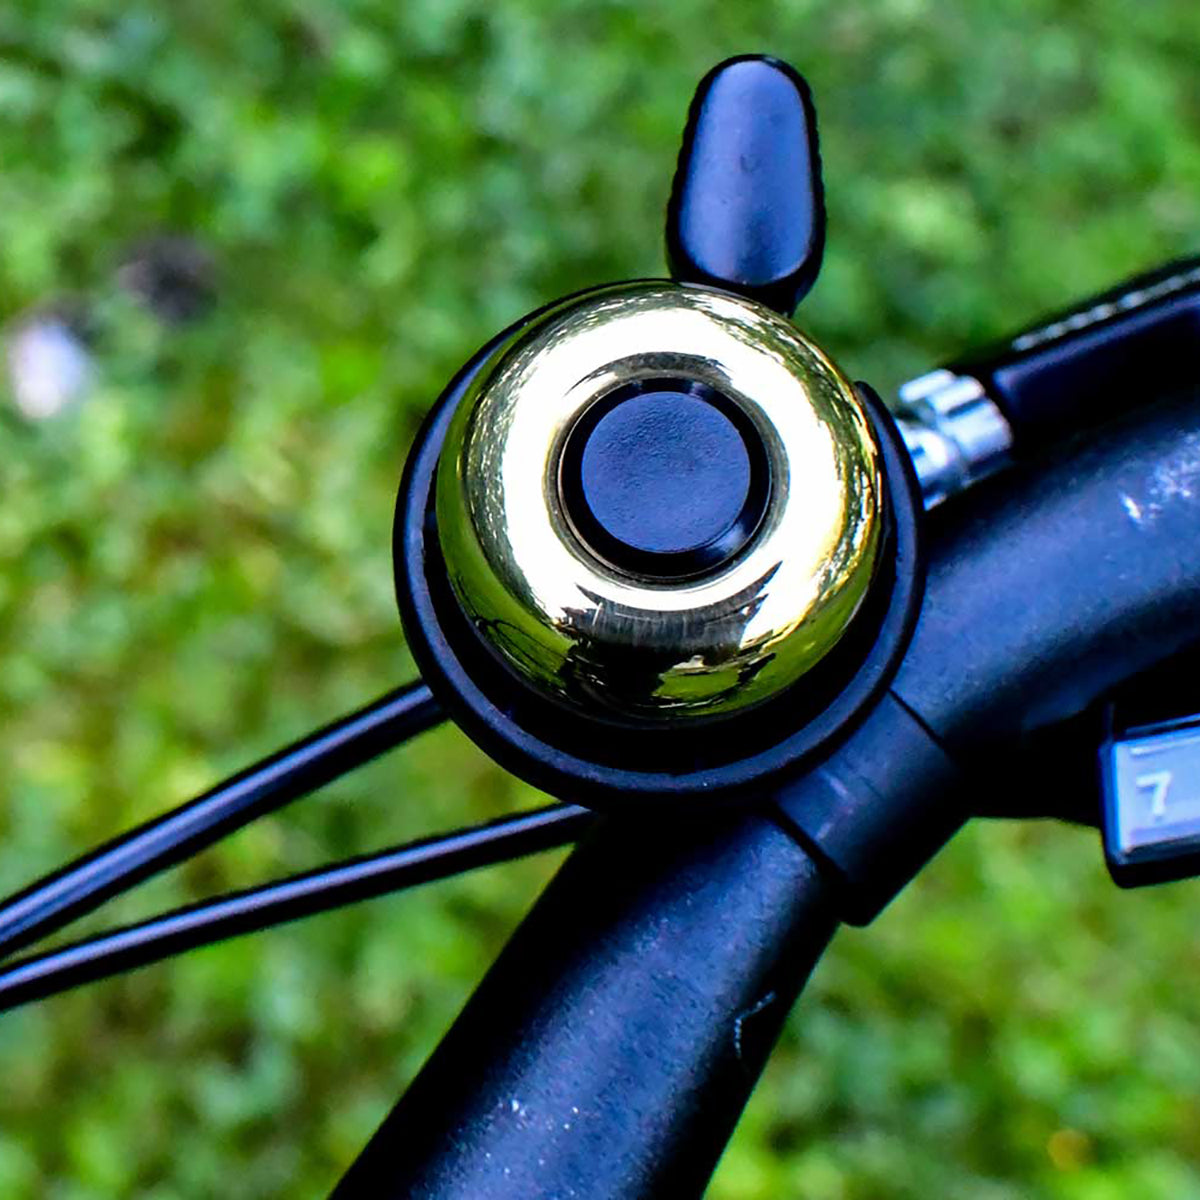 Mirrycle Incredibell XL Bicycle Bell Mirrycle